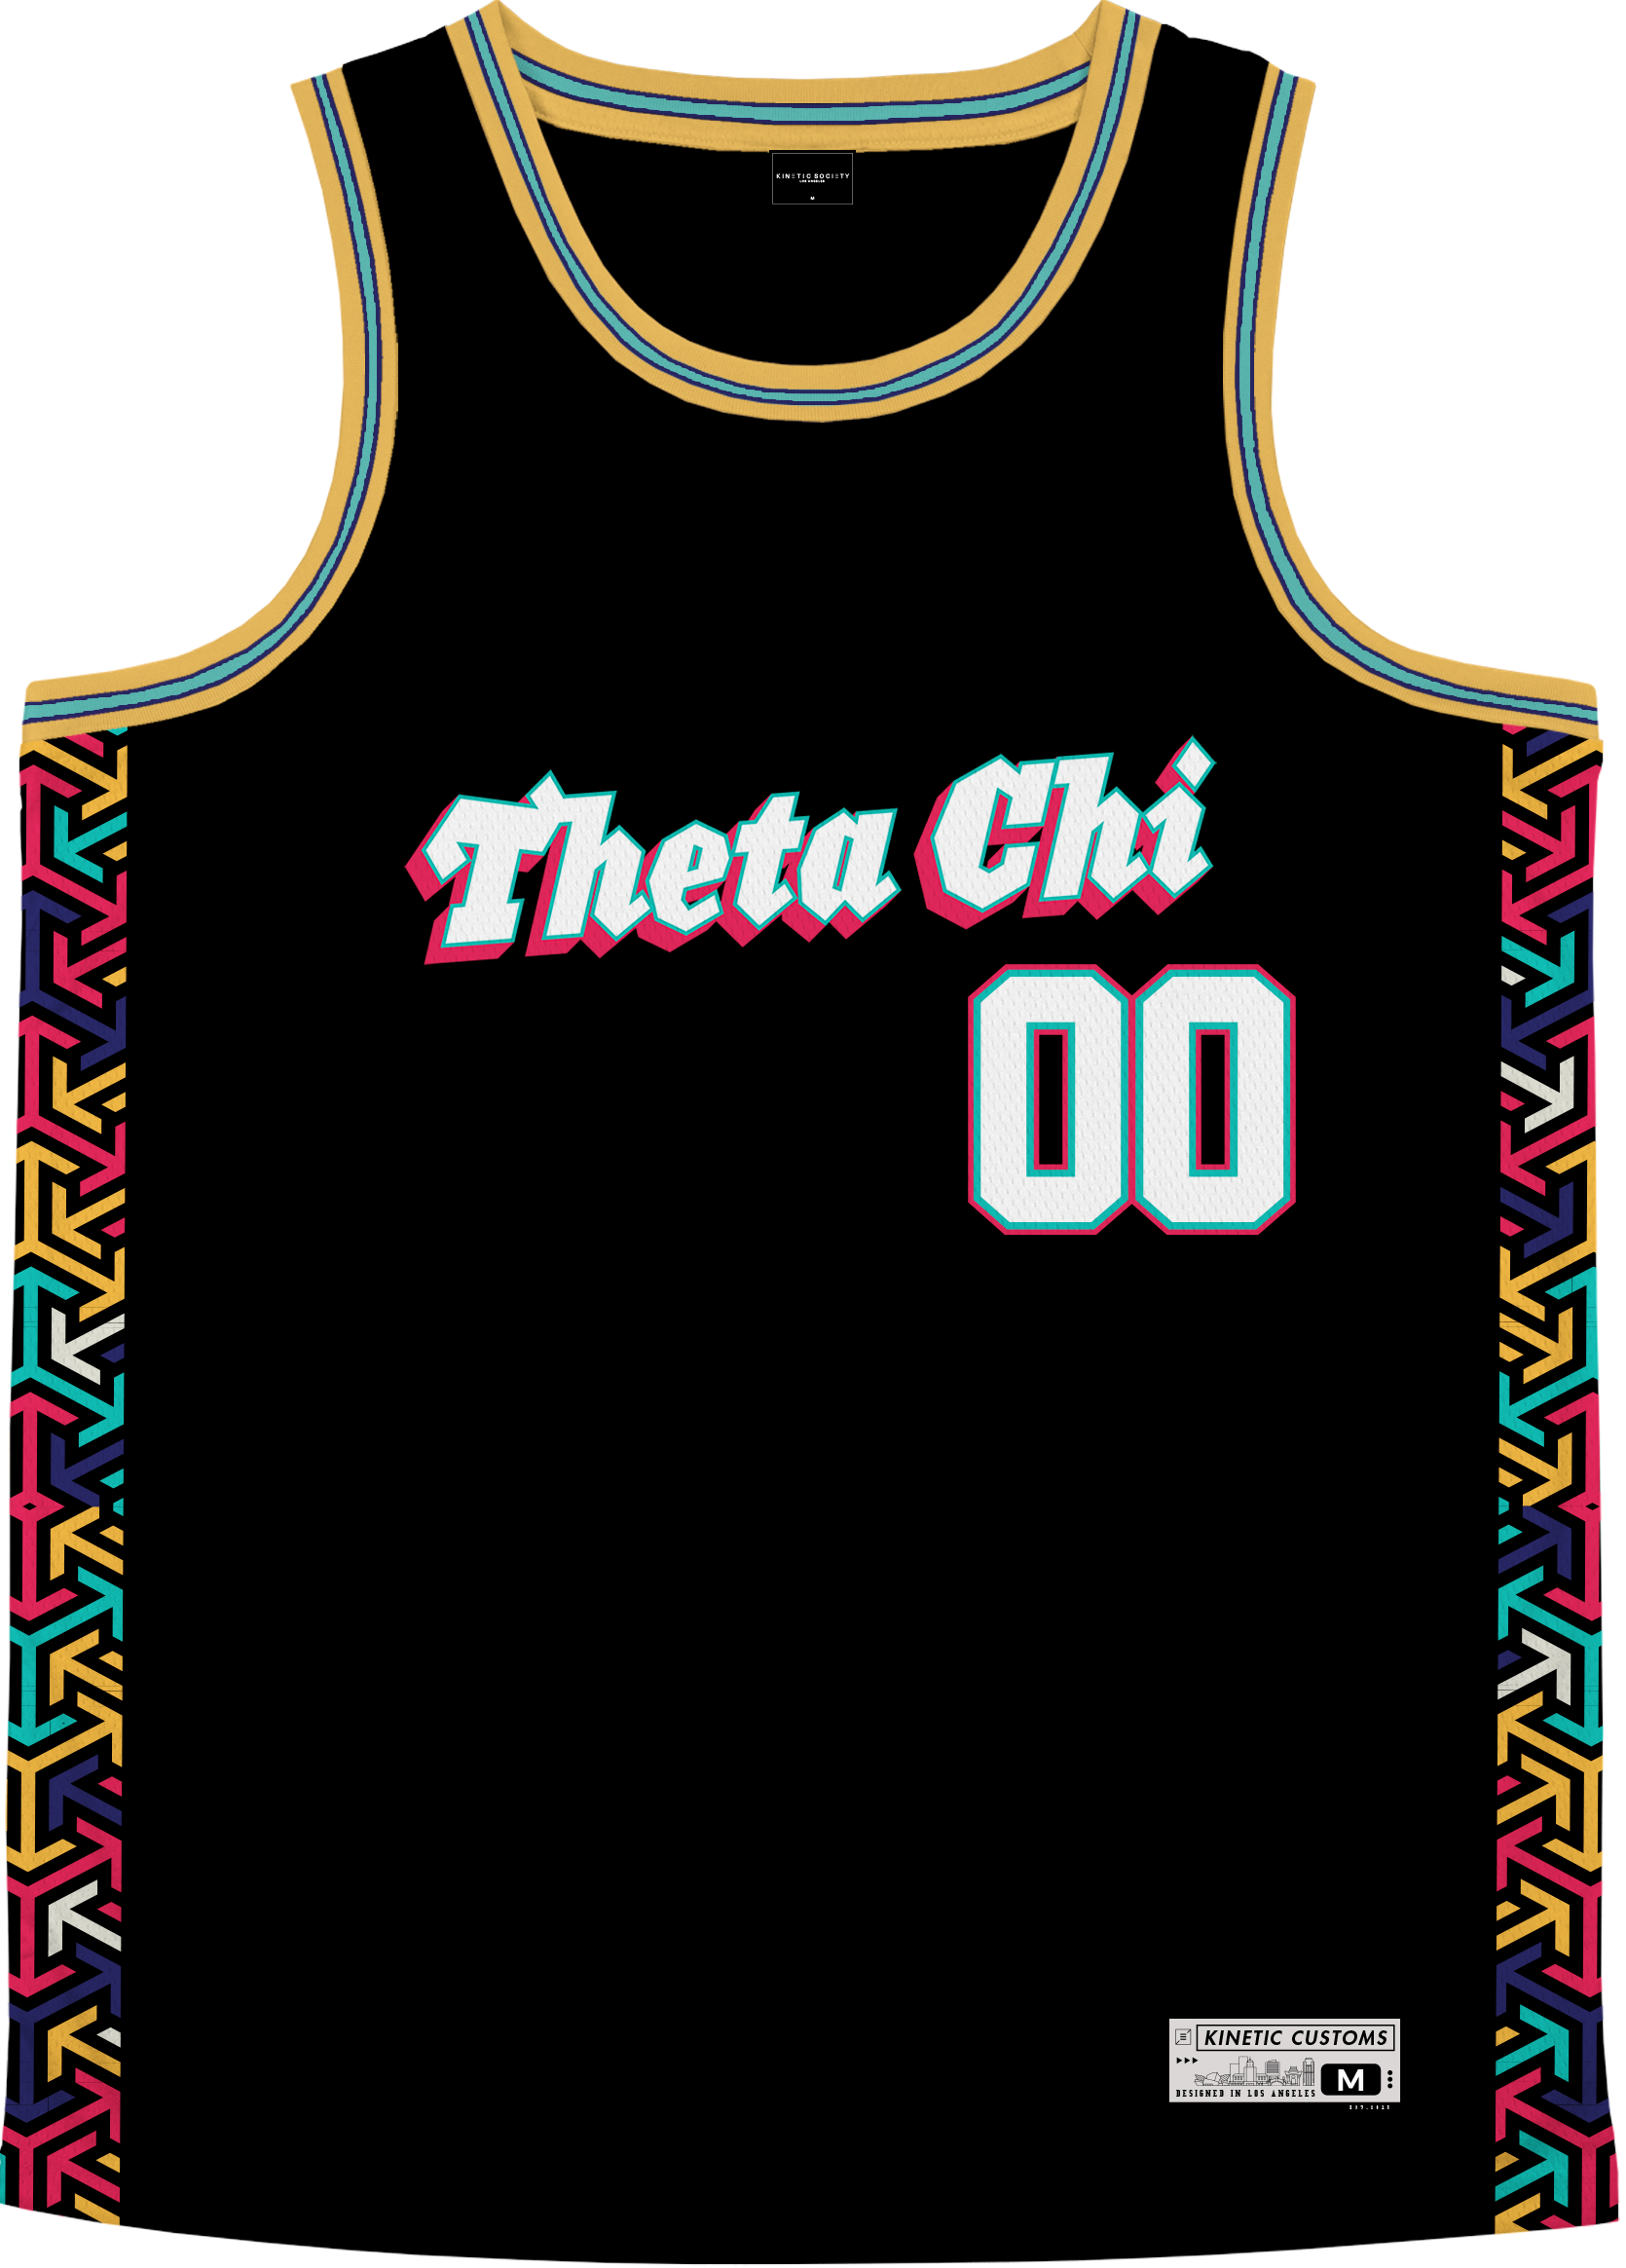 THETA CHI - Cubic Arrows Basketball Jersey